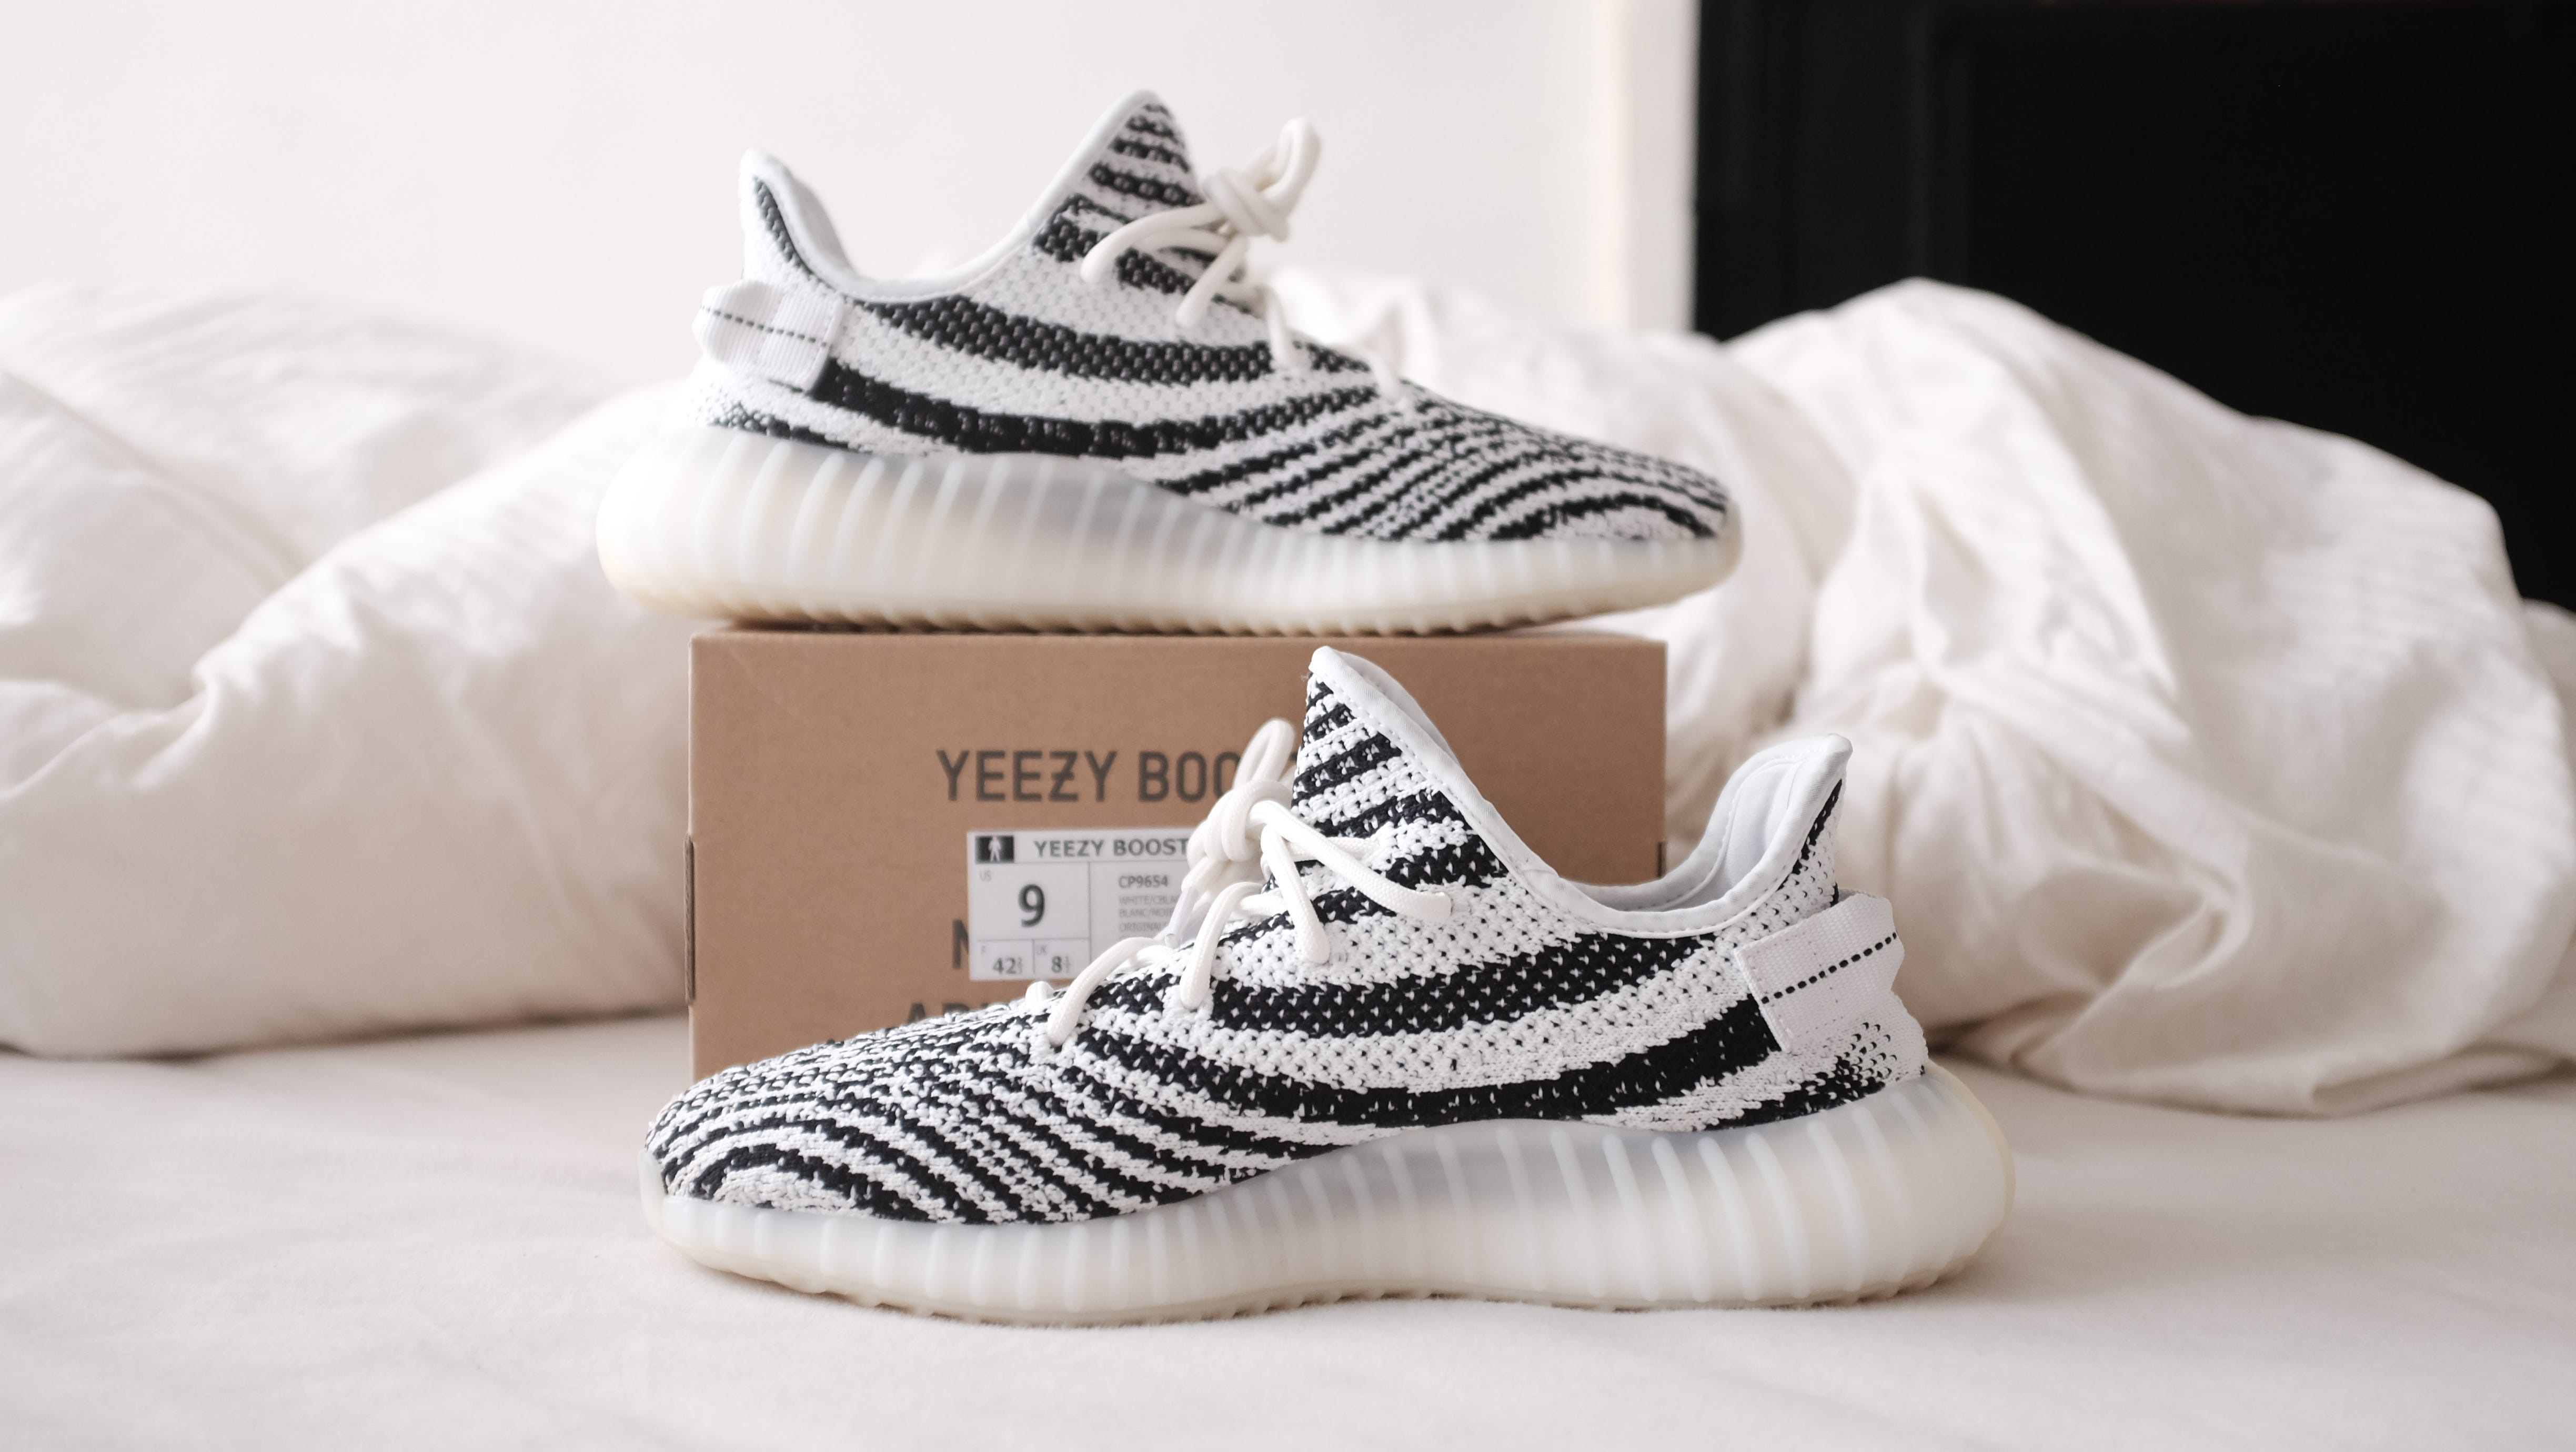 yeezy zebra left shoe